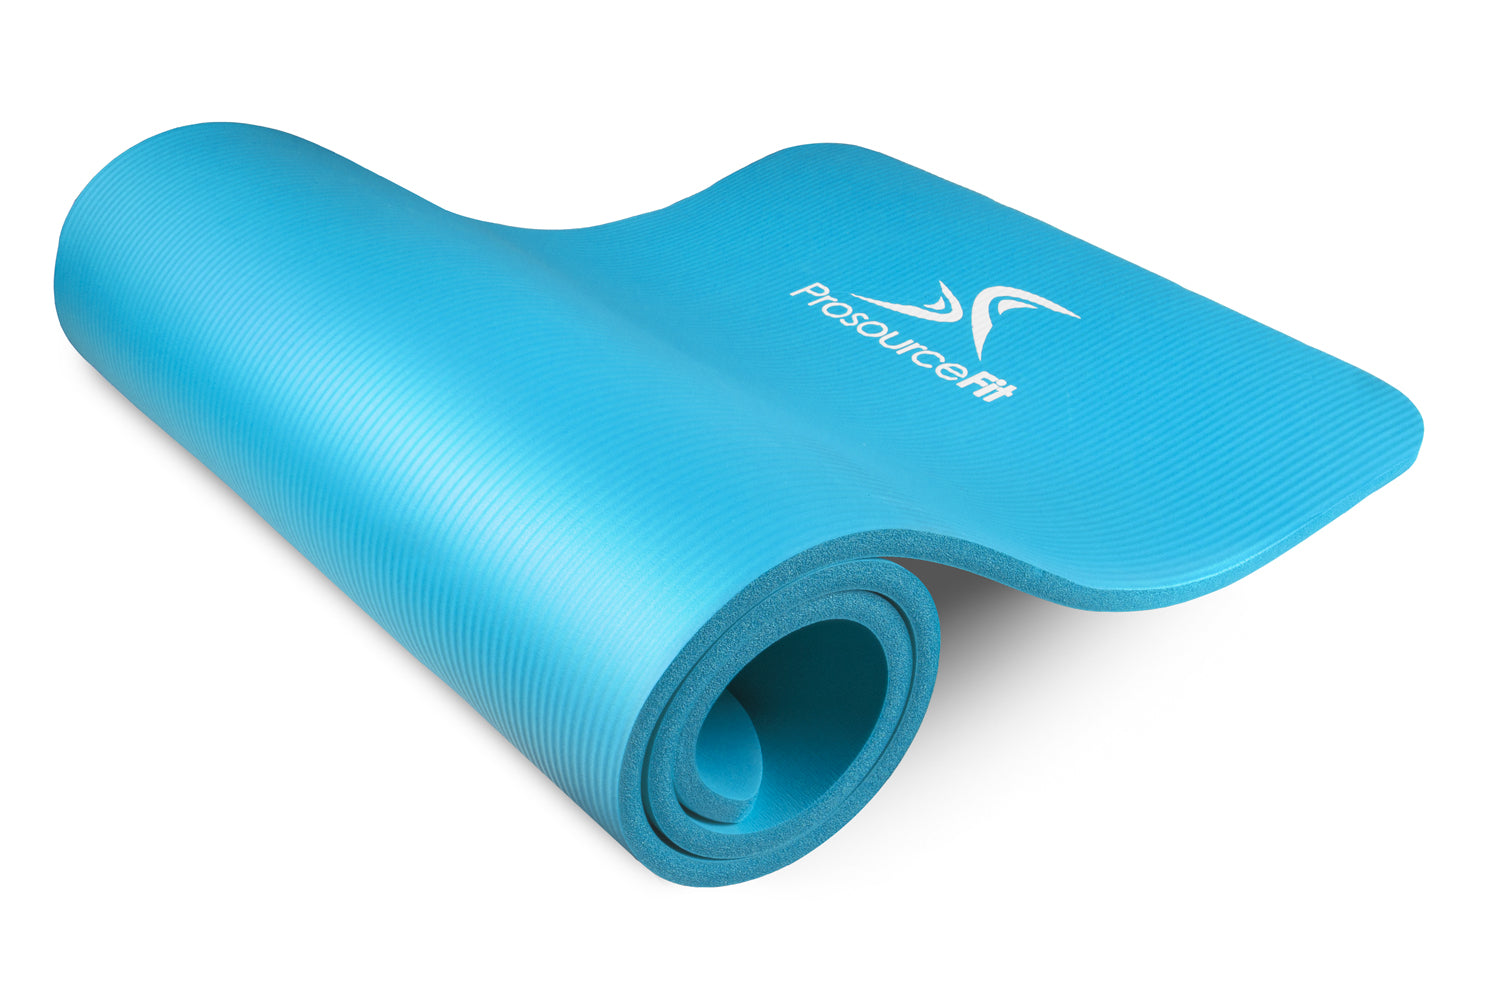 Aqua Extra Thick Yoga and Pilates Mat 1/2 inch